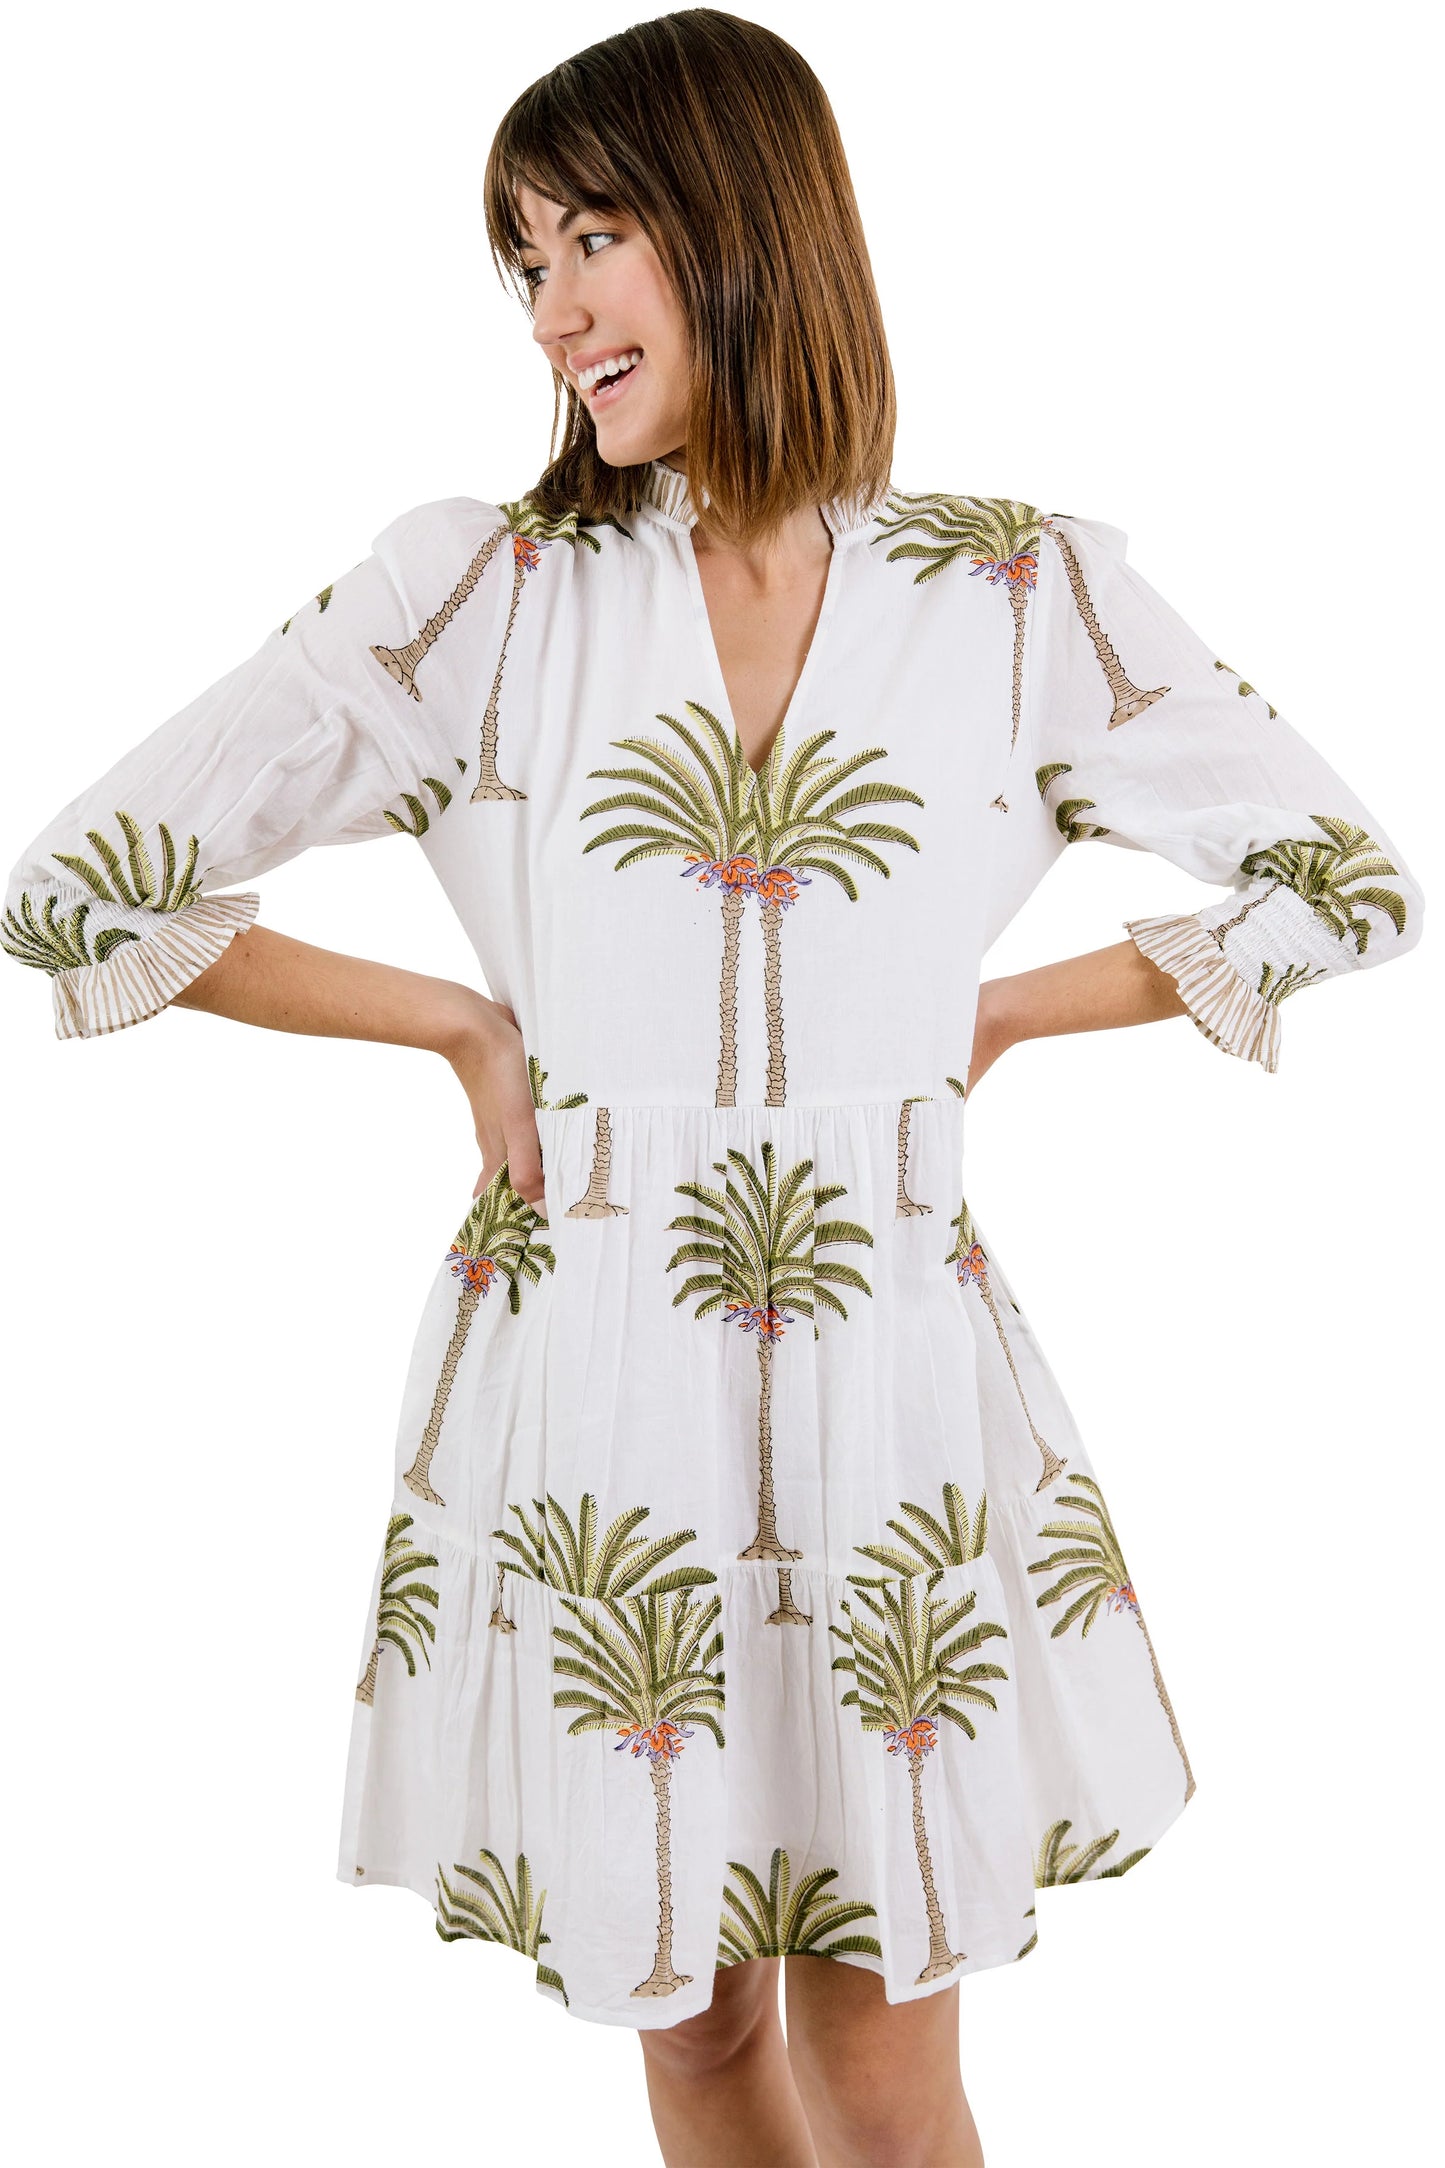 Charleston Shoe Co. Alexis Dress - White Palm